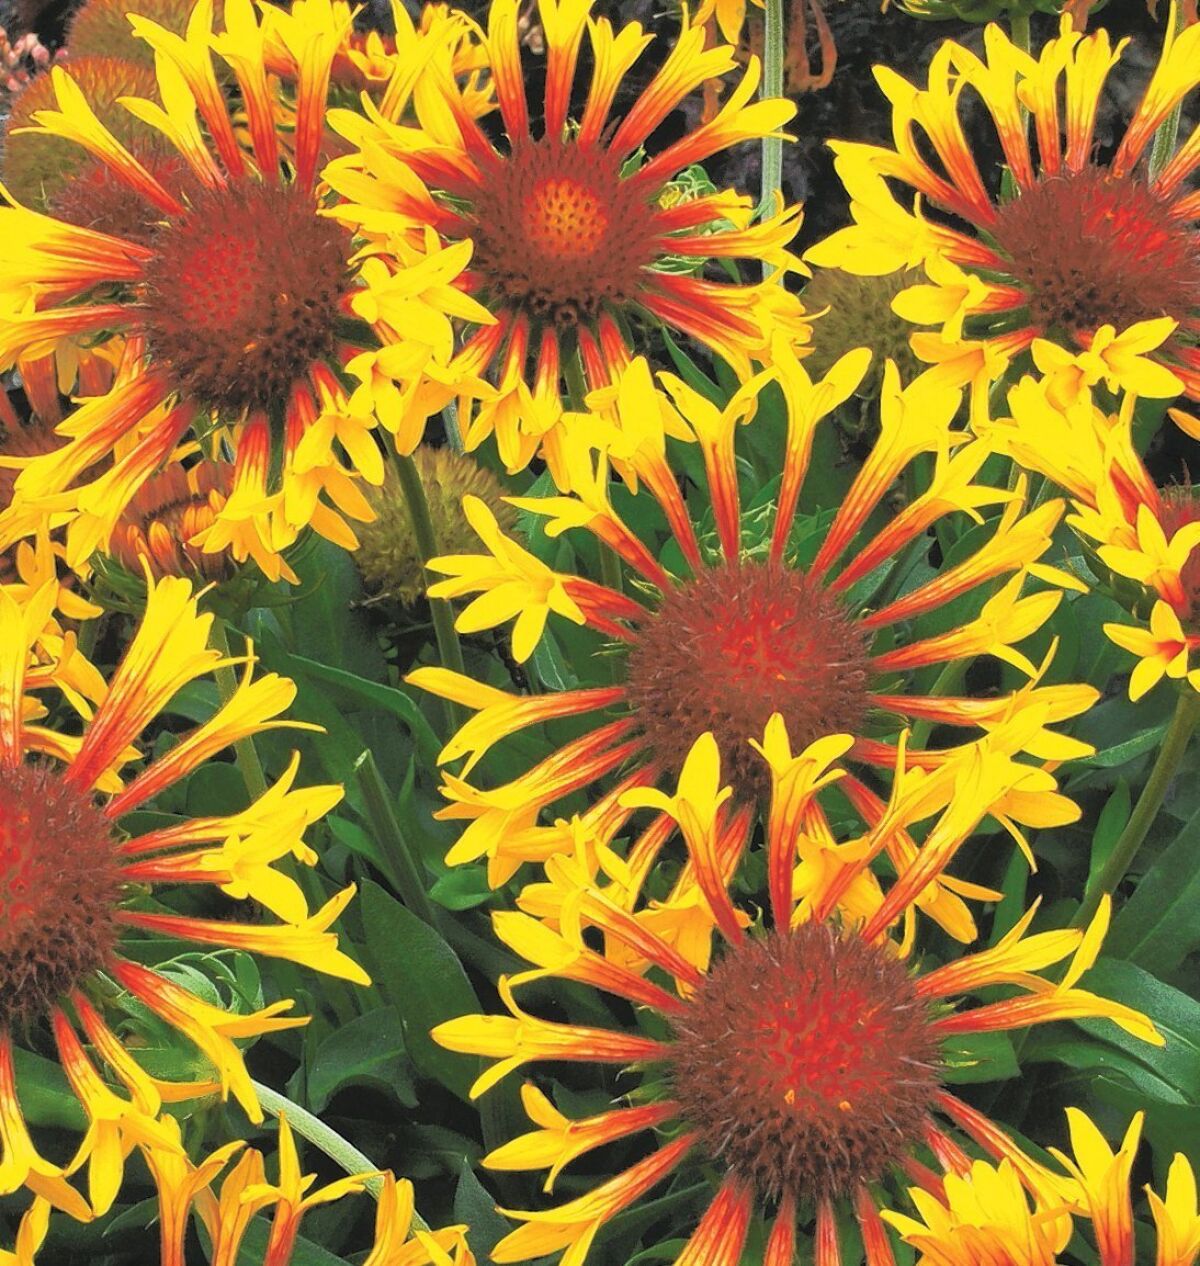 Blanket Flowers (Gaillardia) ‘Sun Flare,’ Terra Nova Nurseries